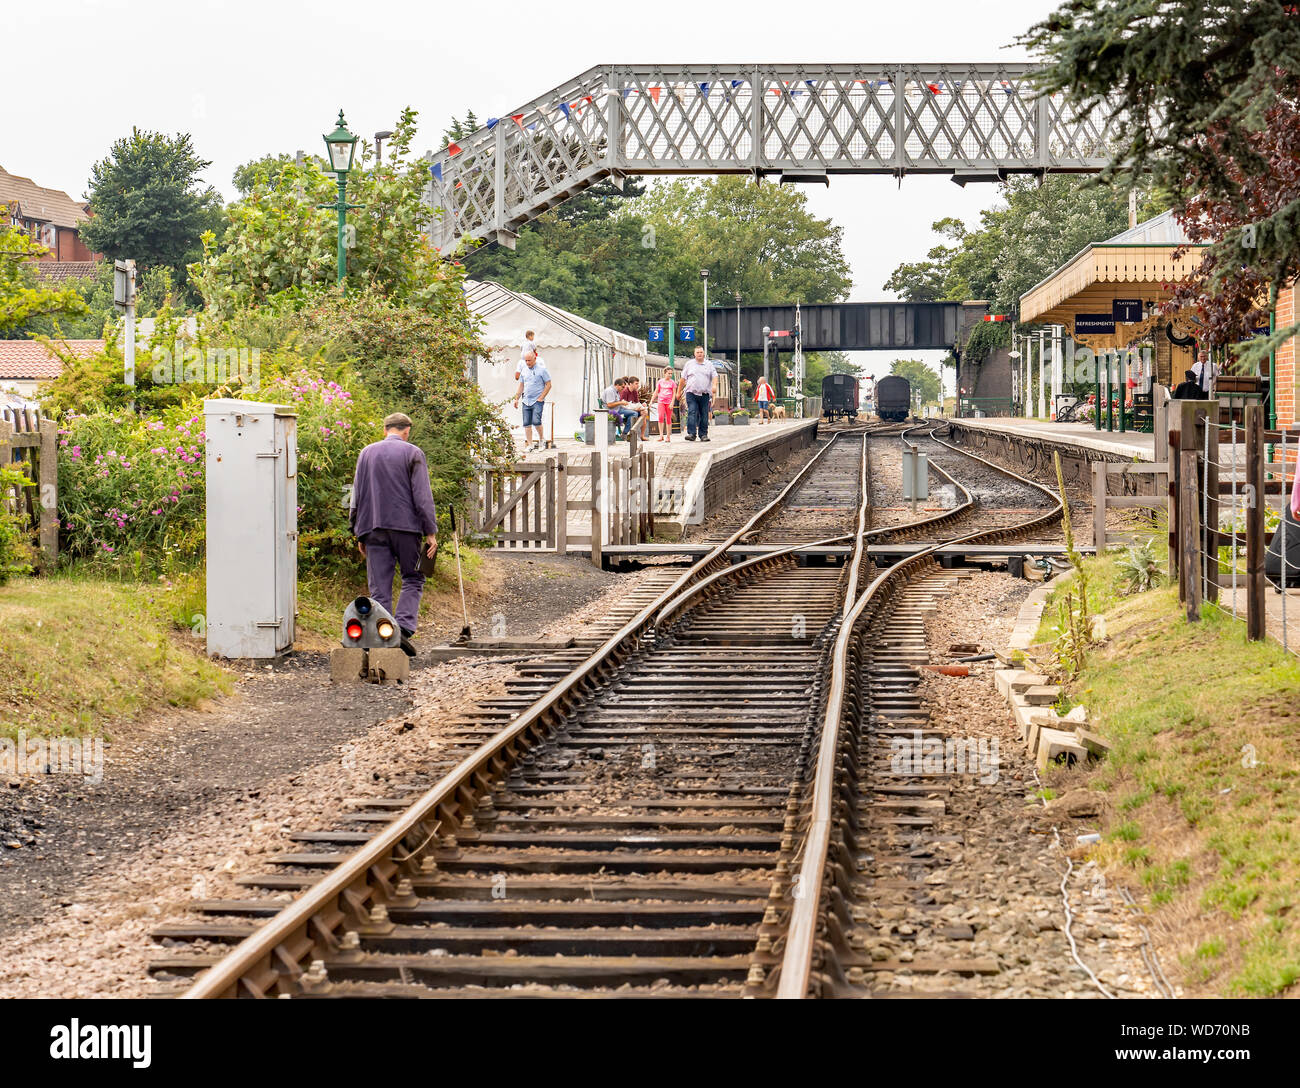 Man Walking Railway Tracks Stock Photos & Man Walking Railway ...